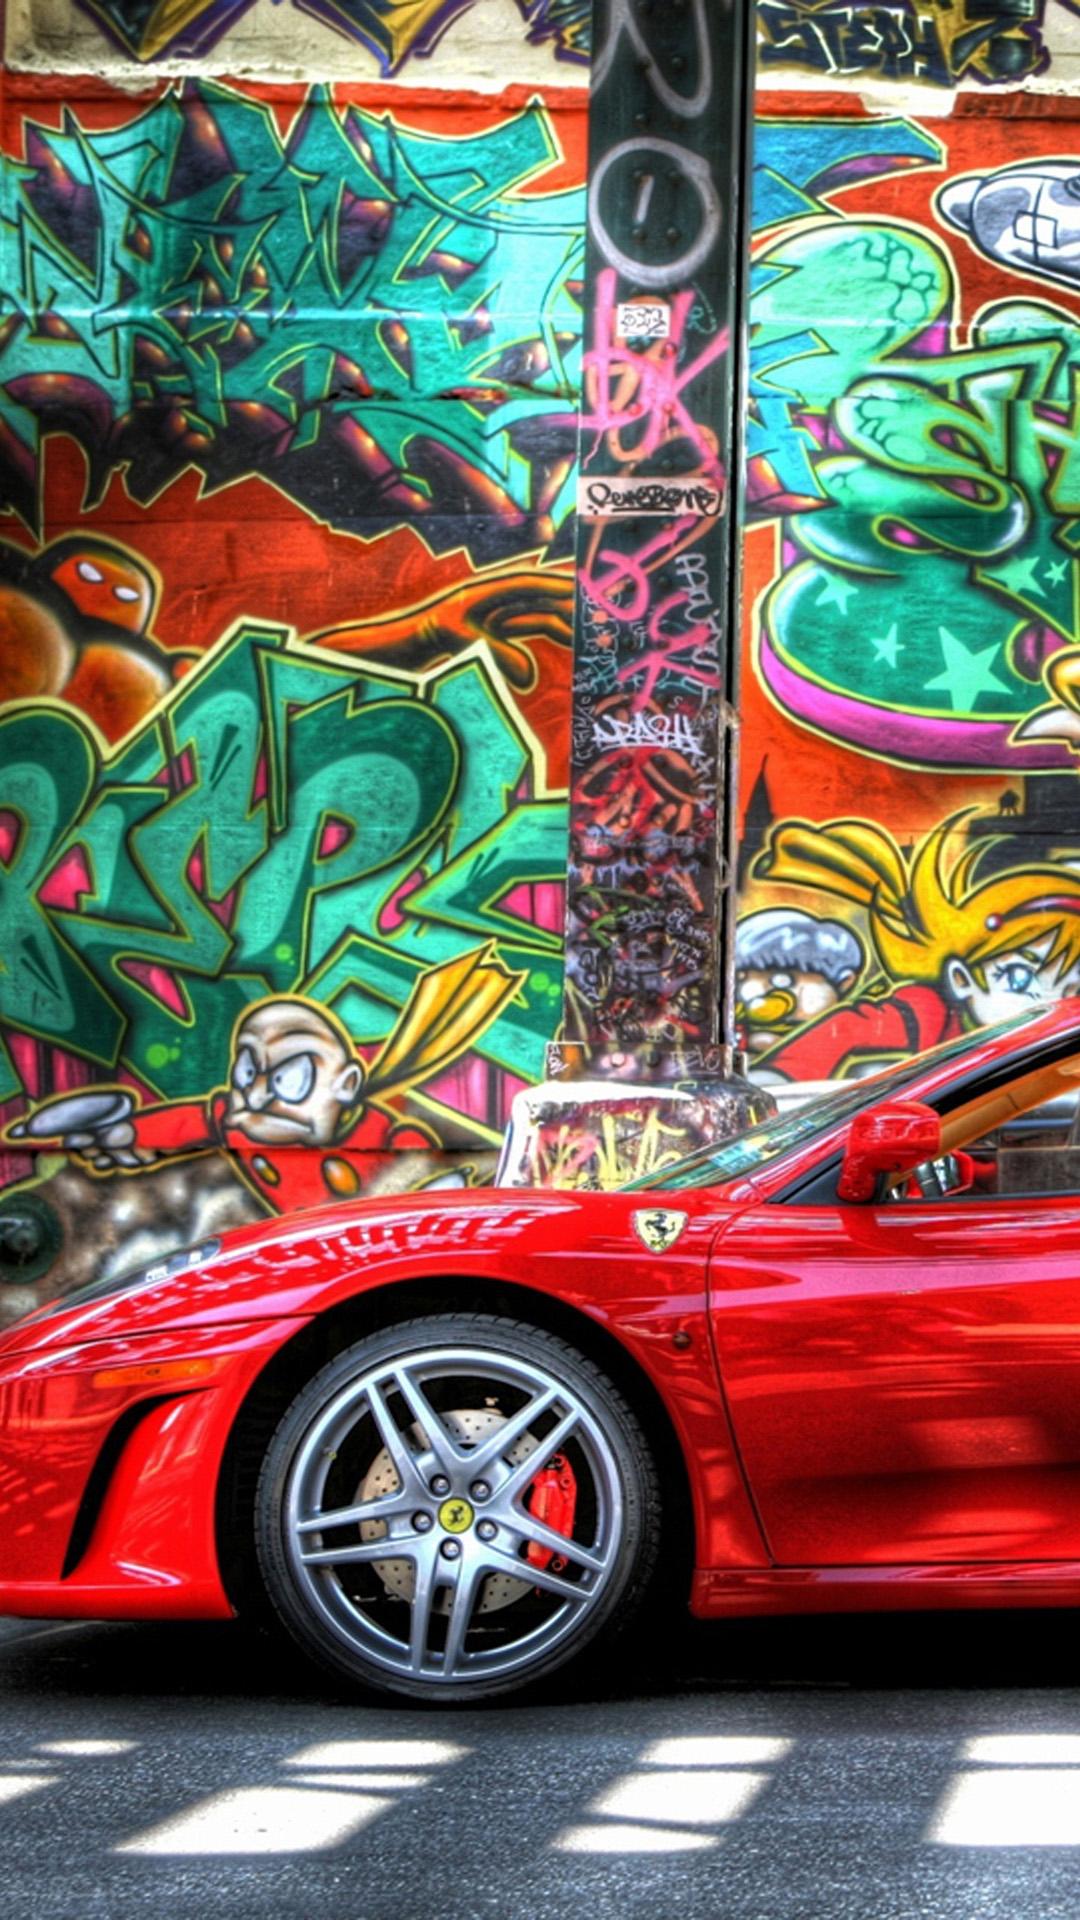 Ferrari and graffiti